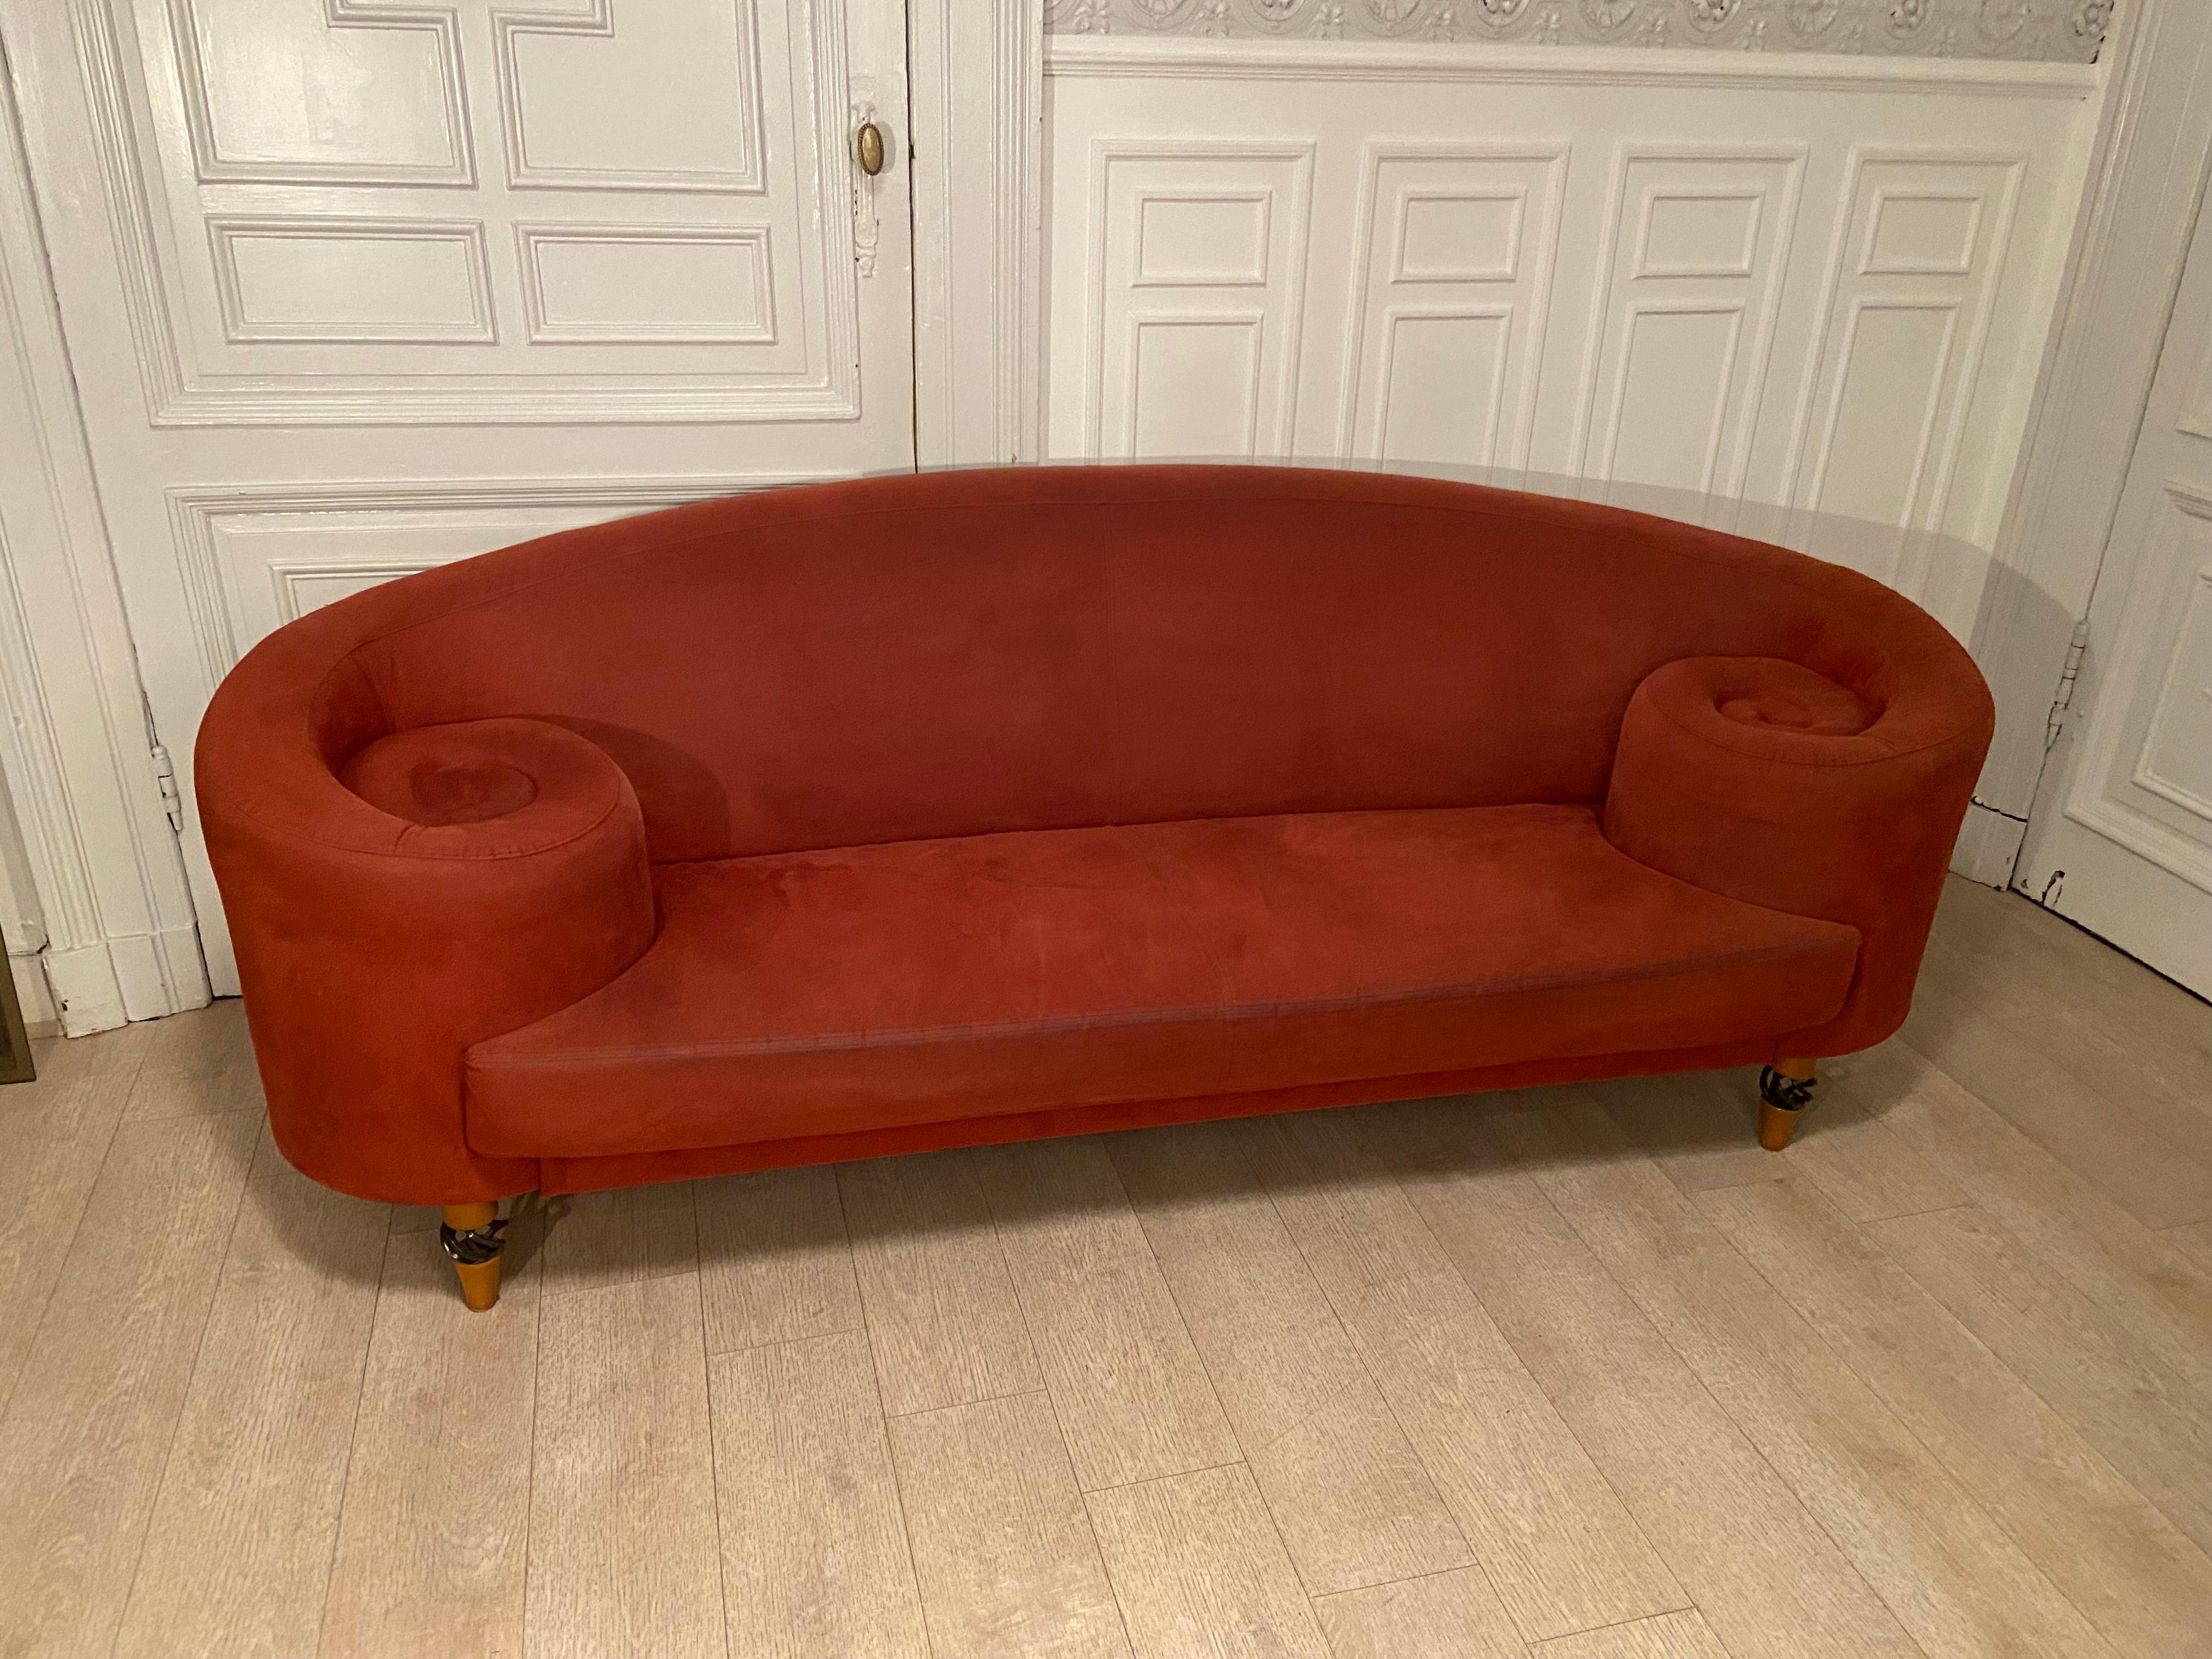 'Gioconda' Sofa By Maroeska Metz For Gelderland Ax, Netherlands - a pair available.